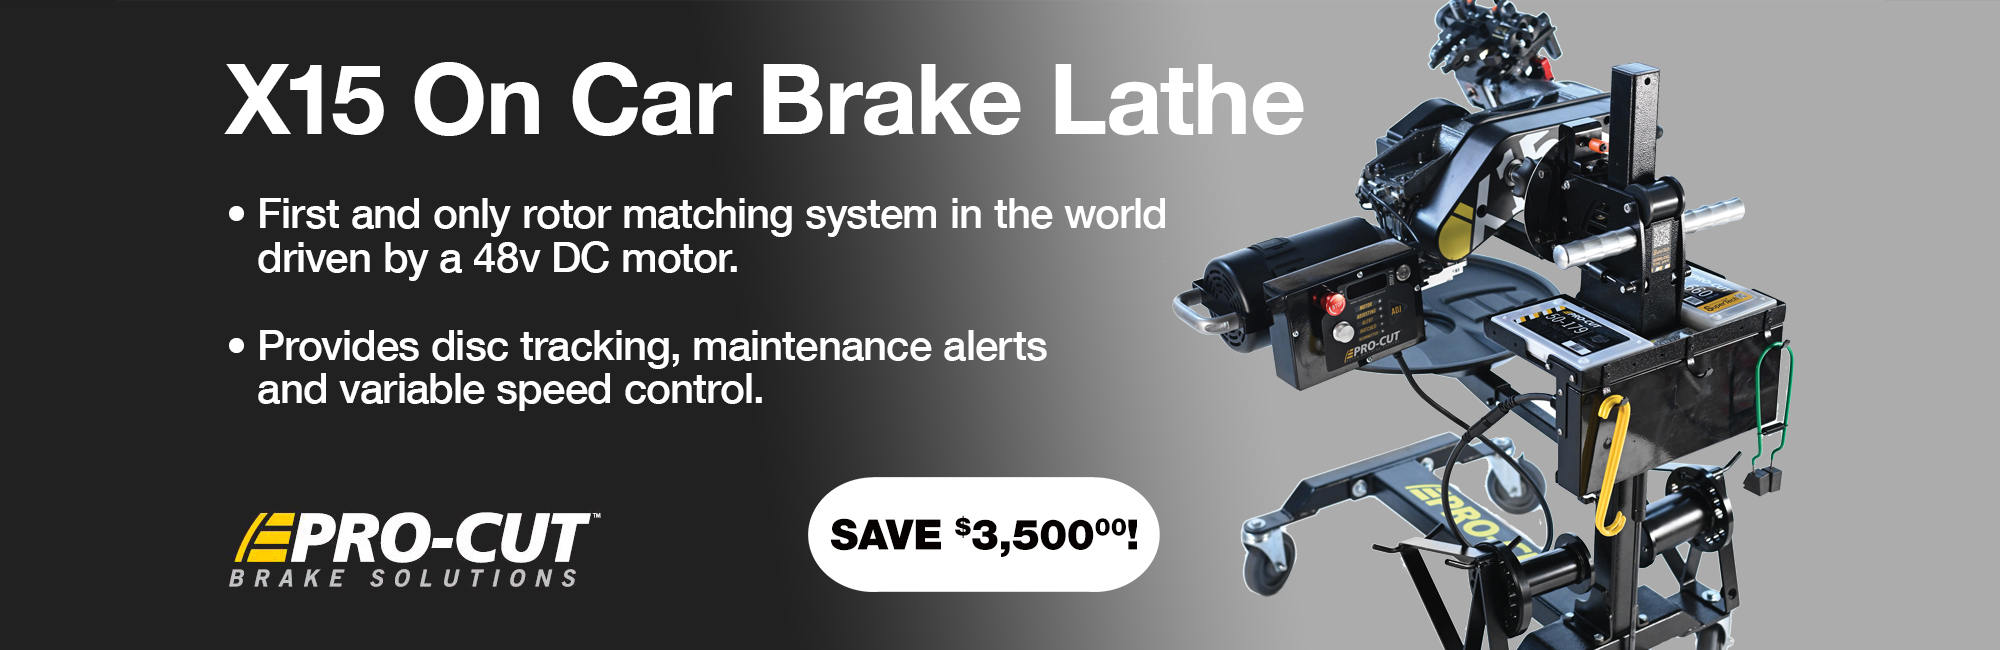 Save now on Pro-Cut brake lathe